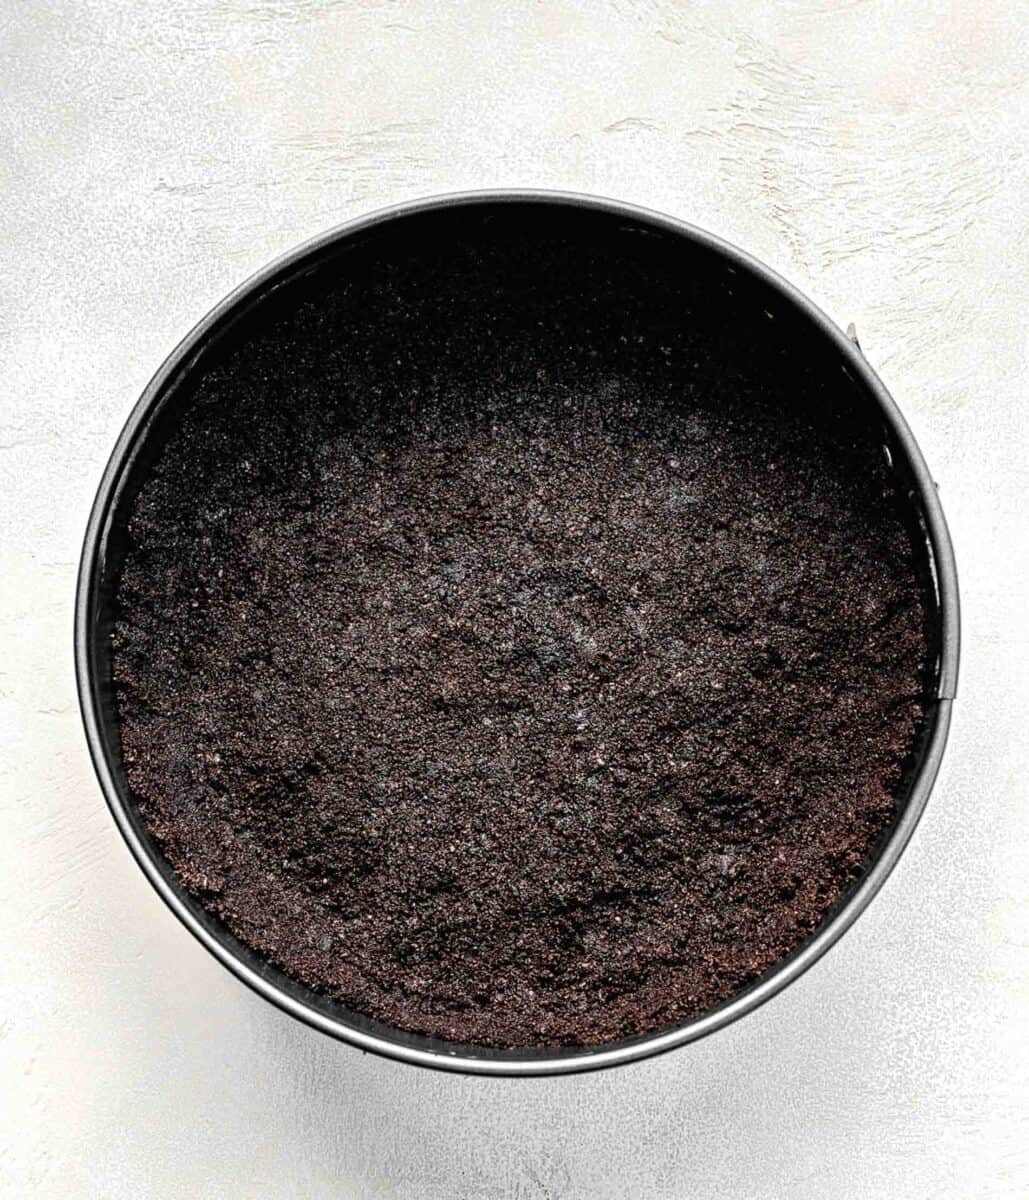 Oreo crust in a springform pan.